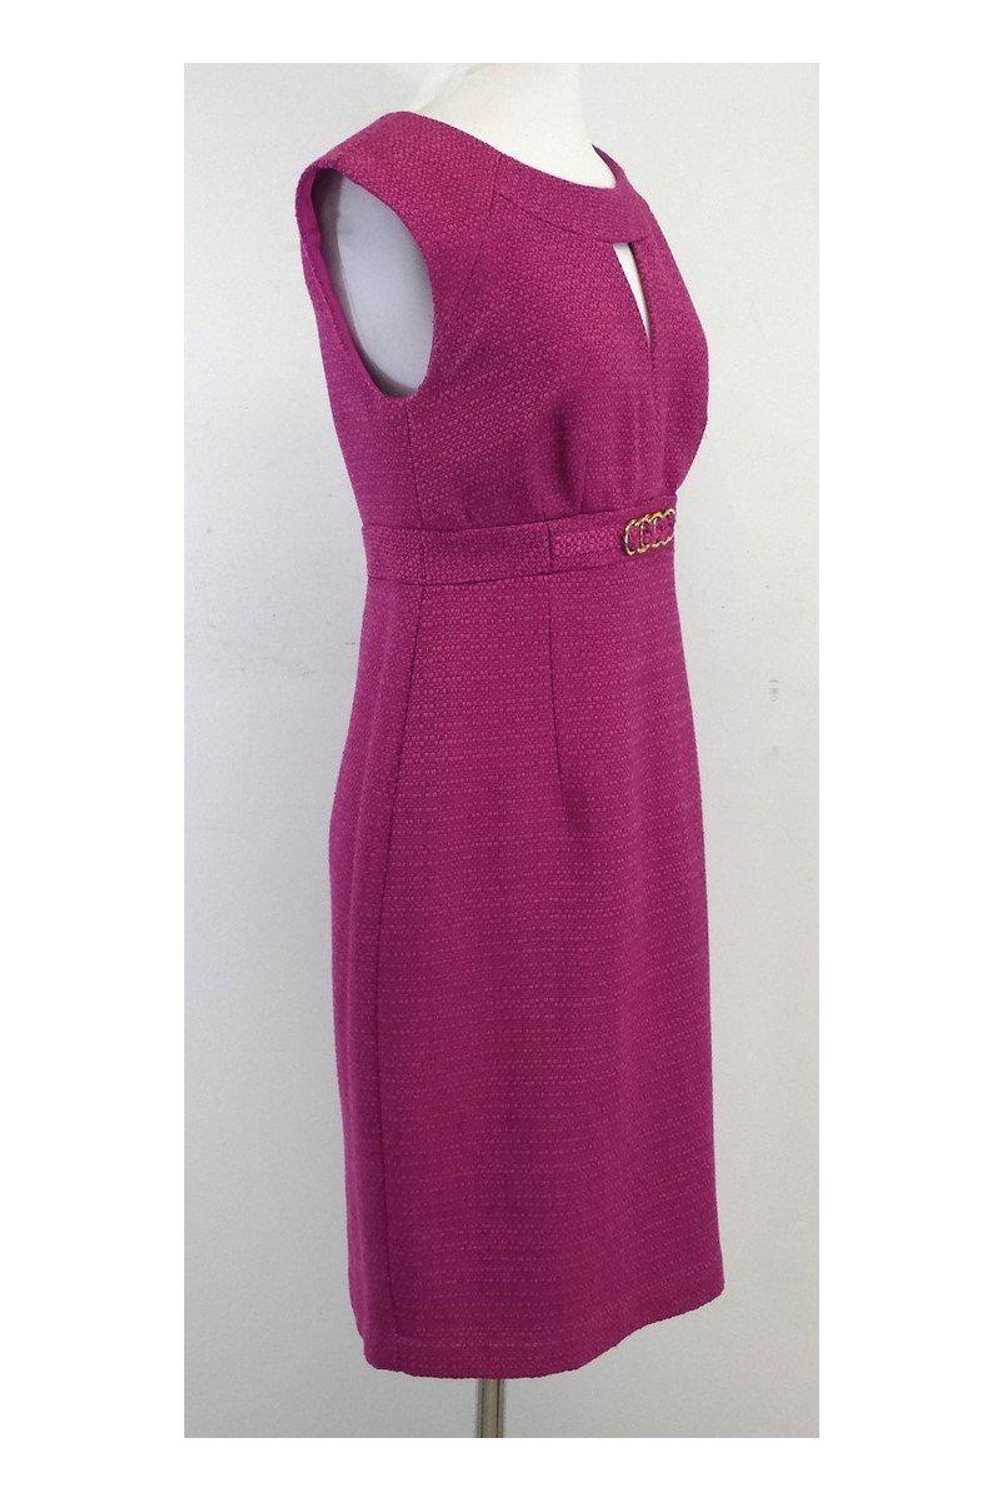 Trina Turk - Sleeveless Pink Tweed Dress Sz 8 - image 2